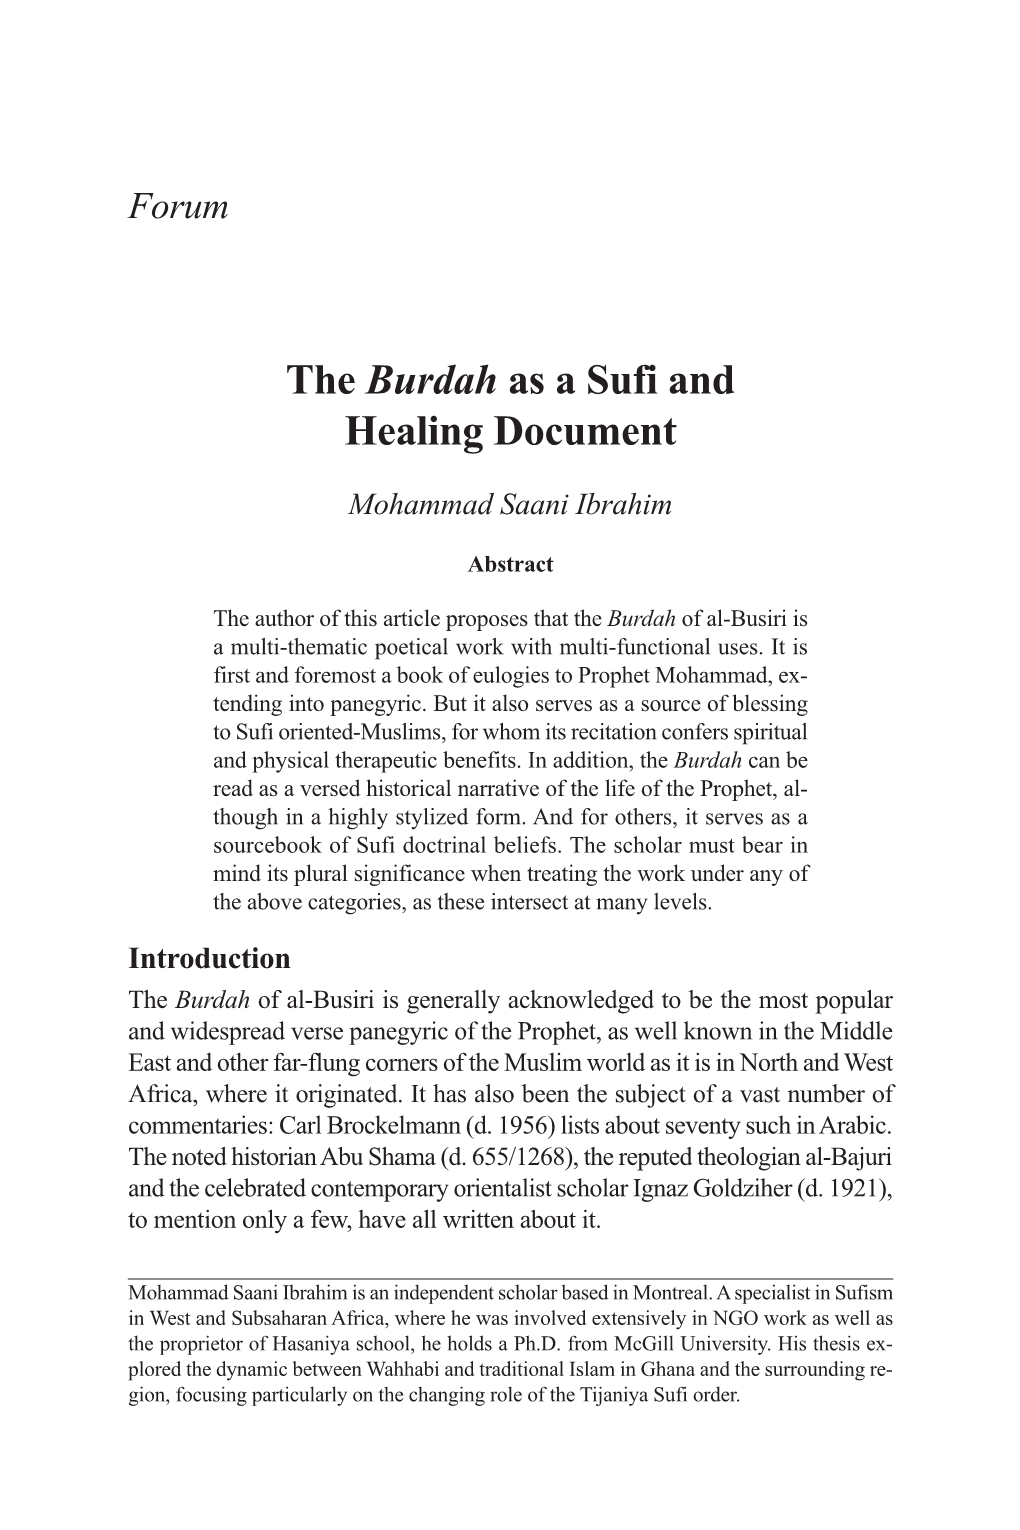 The Burdah As a Sufi and Healing Document